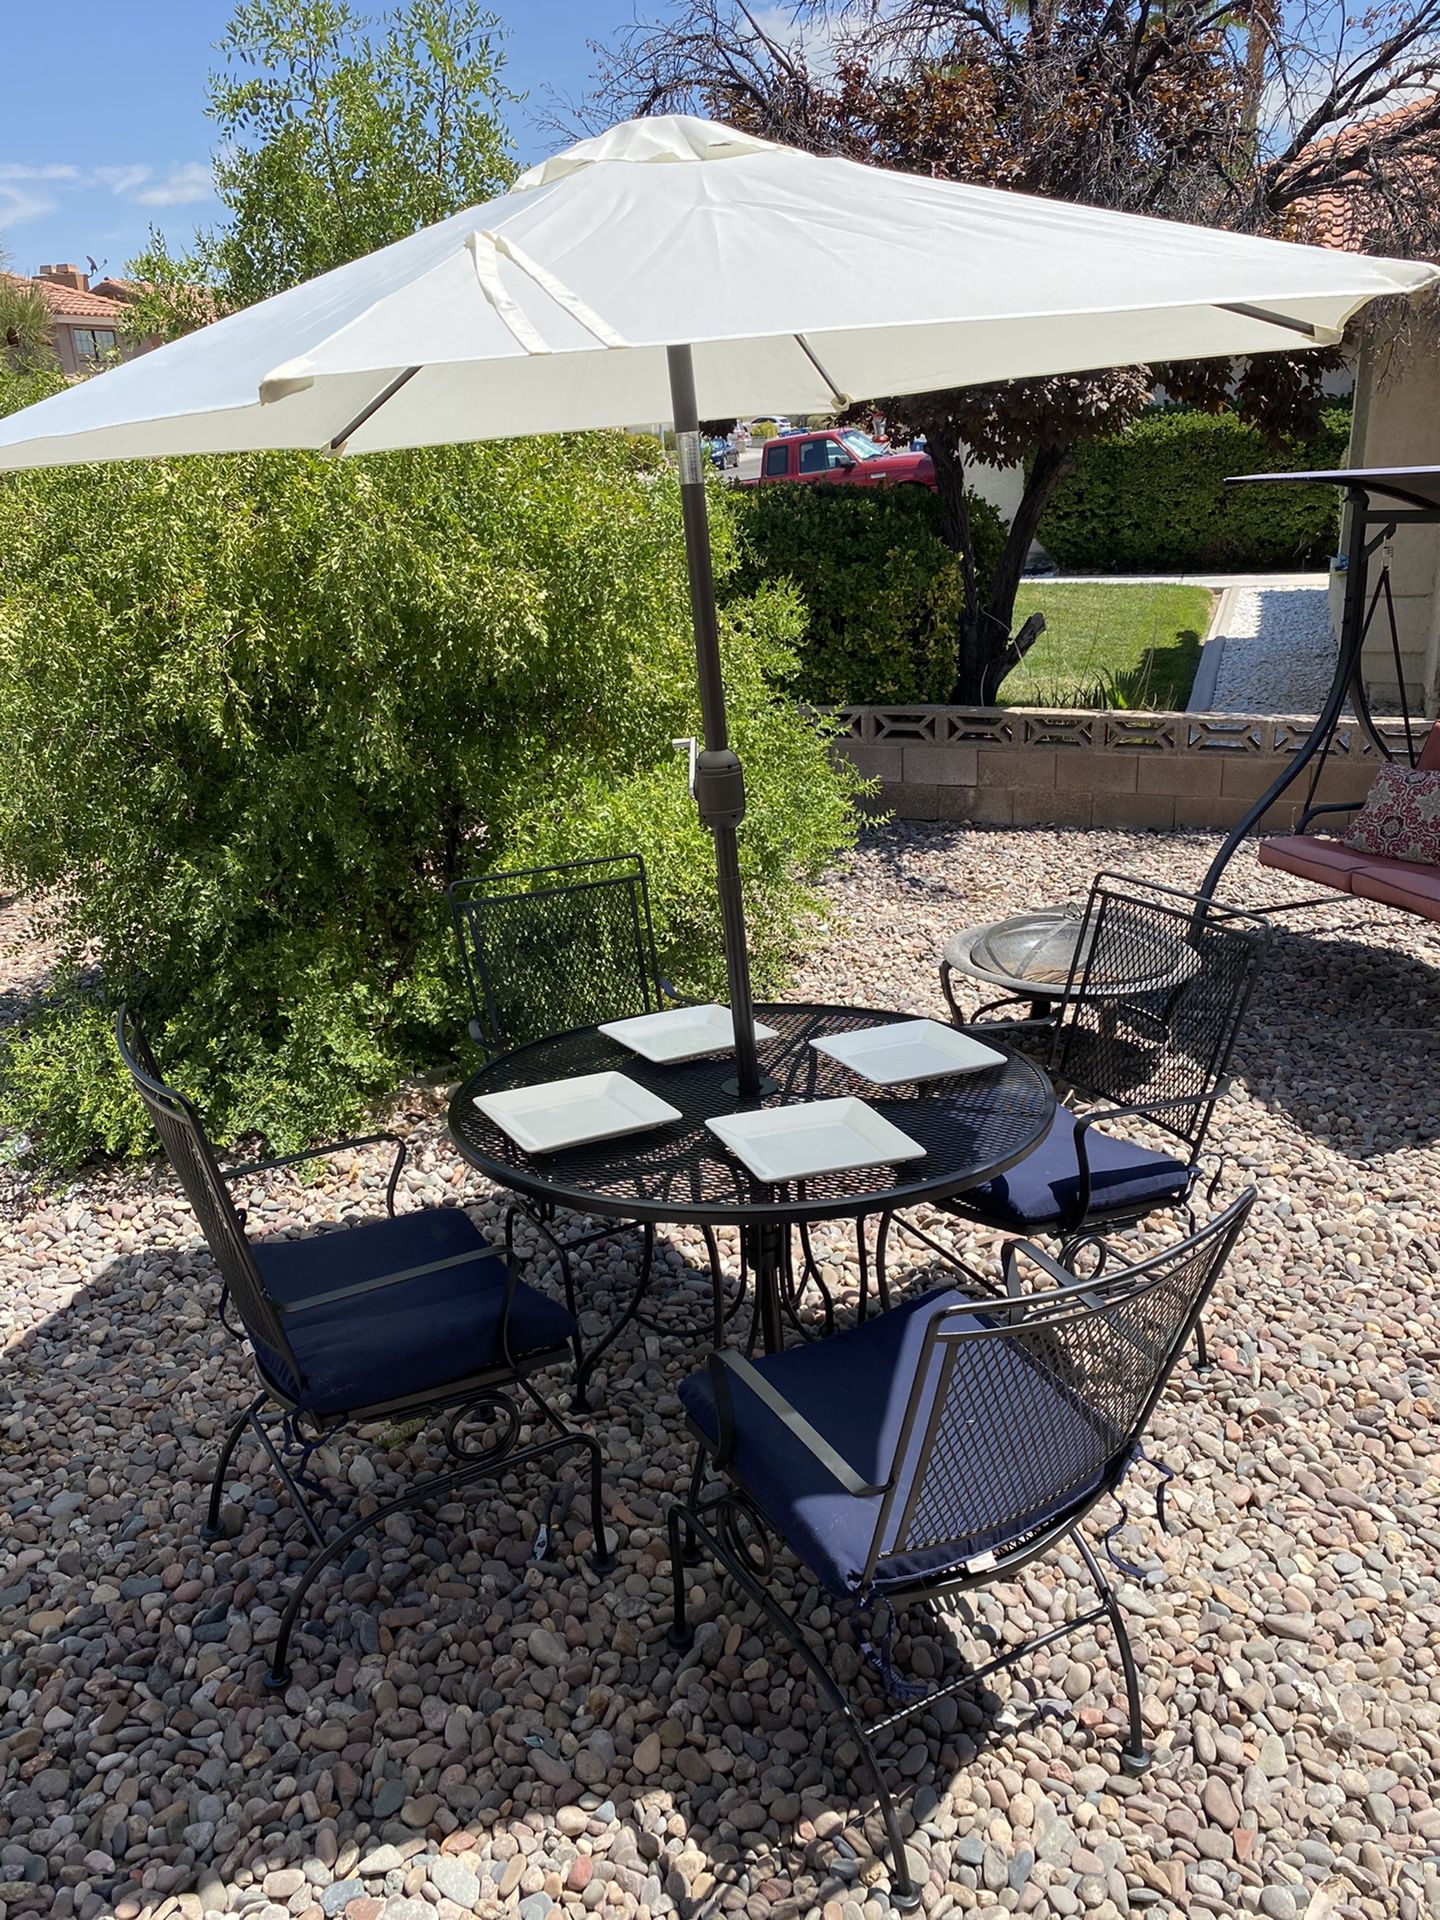 Gorgeous NEW AMAZING Sunbrella Patio Furniture set worth $600